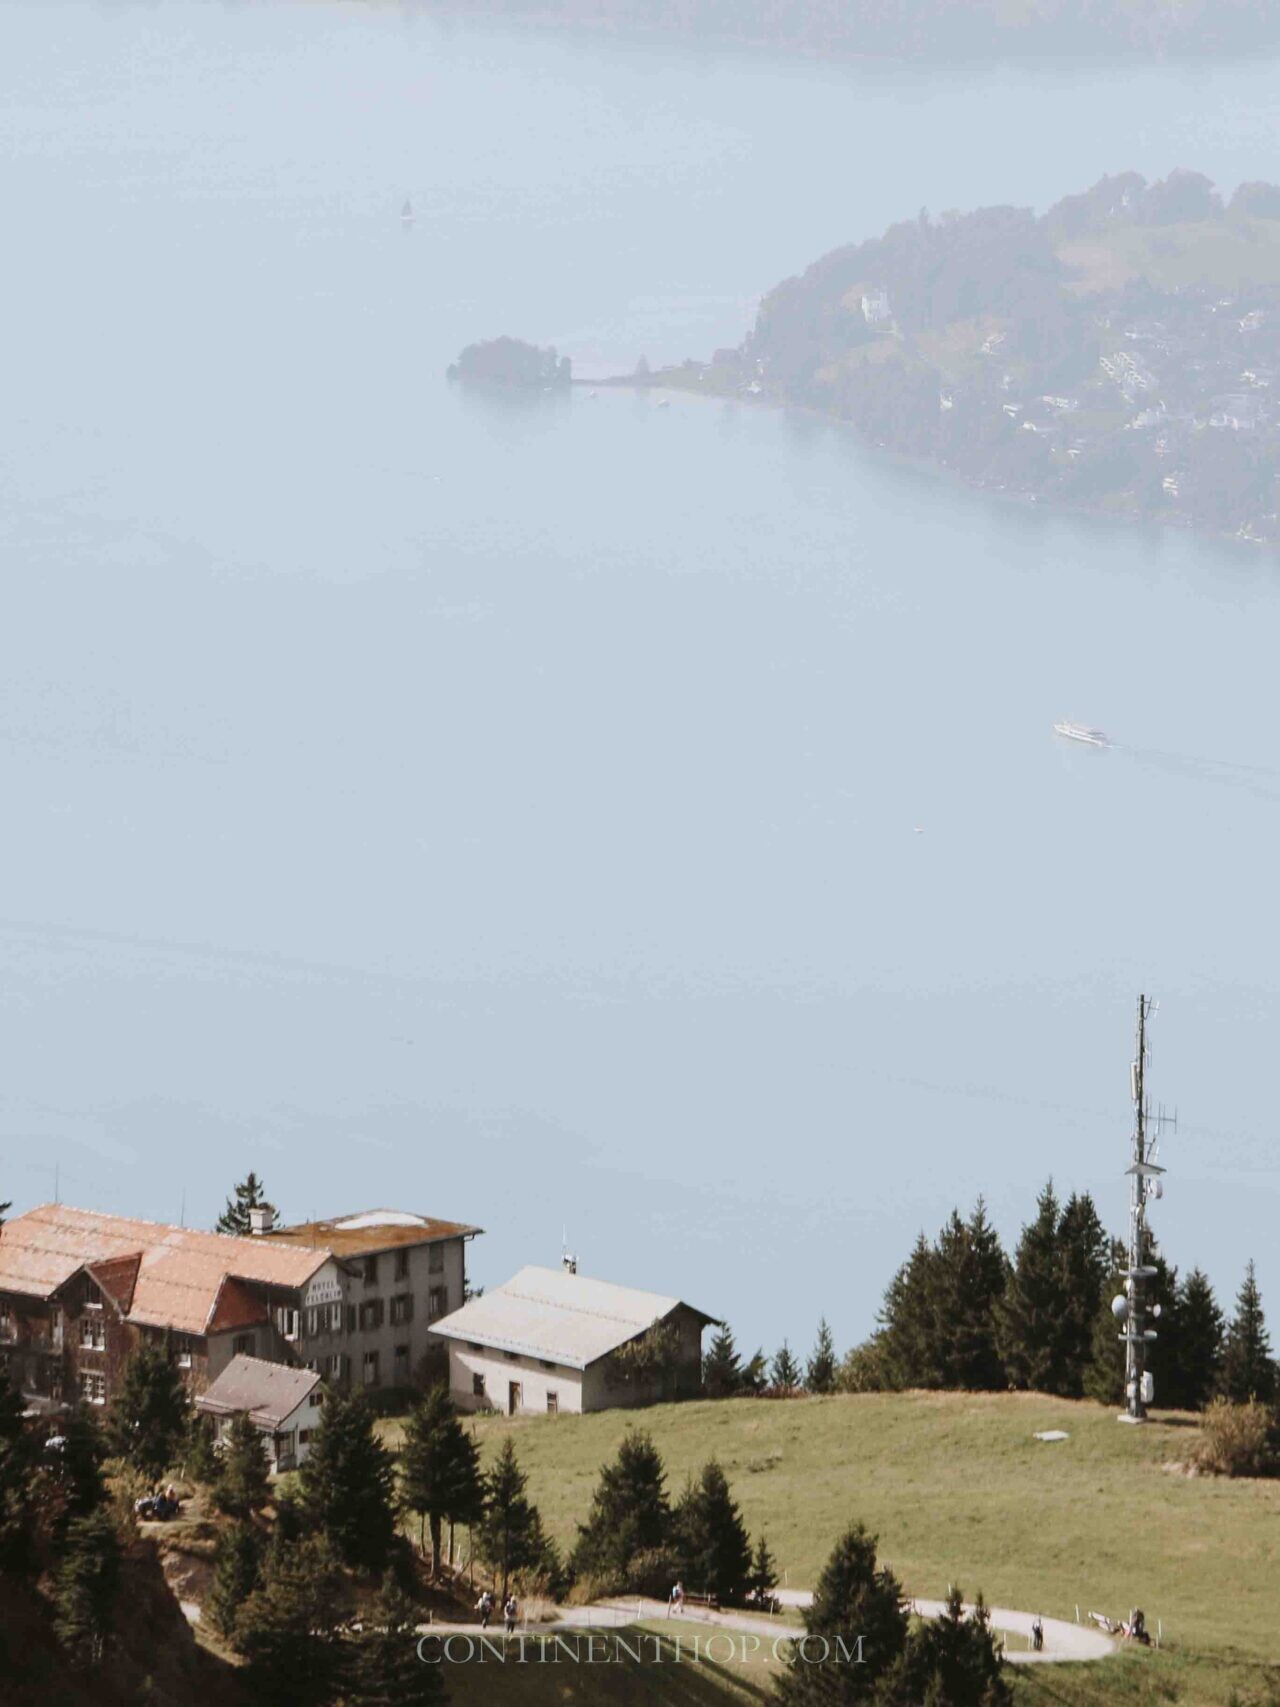 Views from mount rigi on a weekend in Switzerland